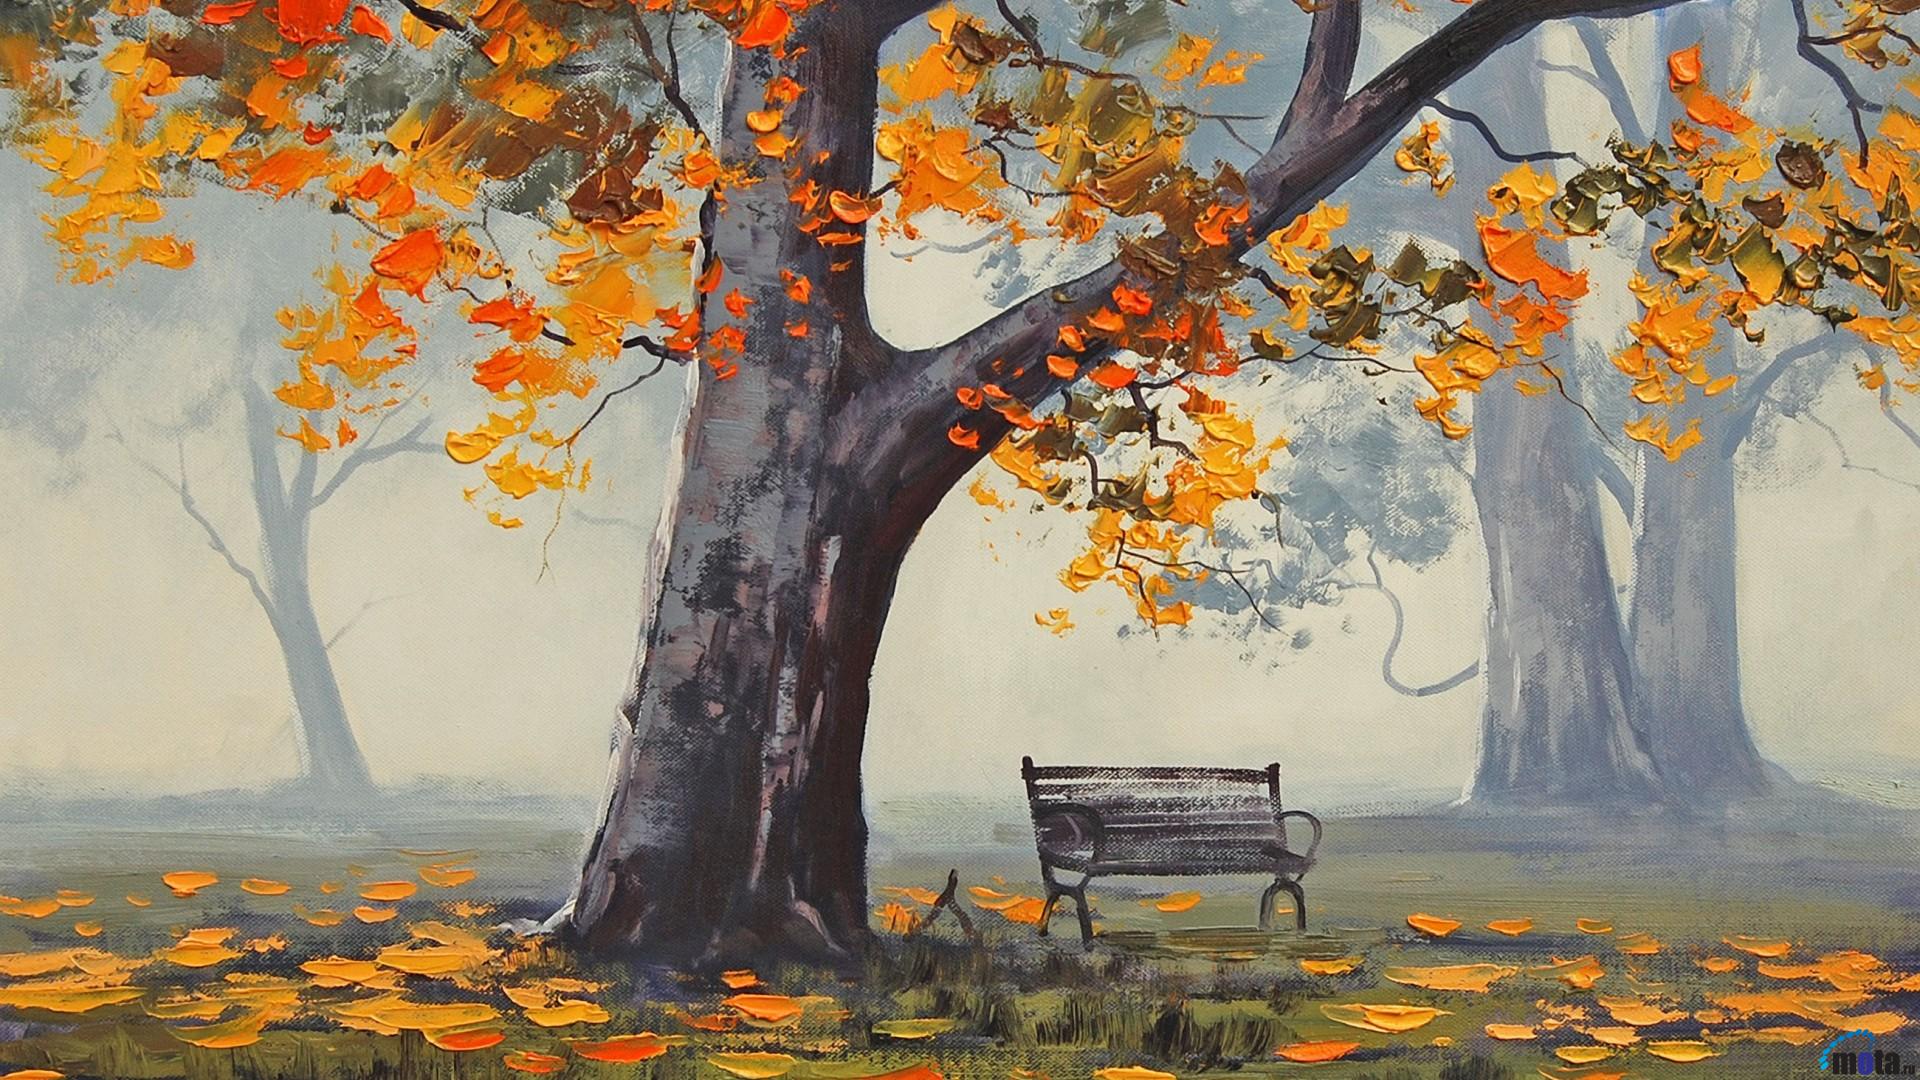 Wallpaper Painting Of Autumn From Graham Gerken X